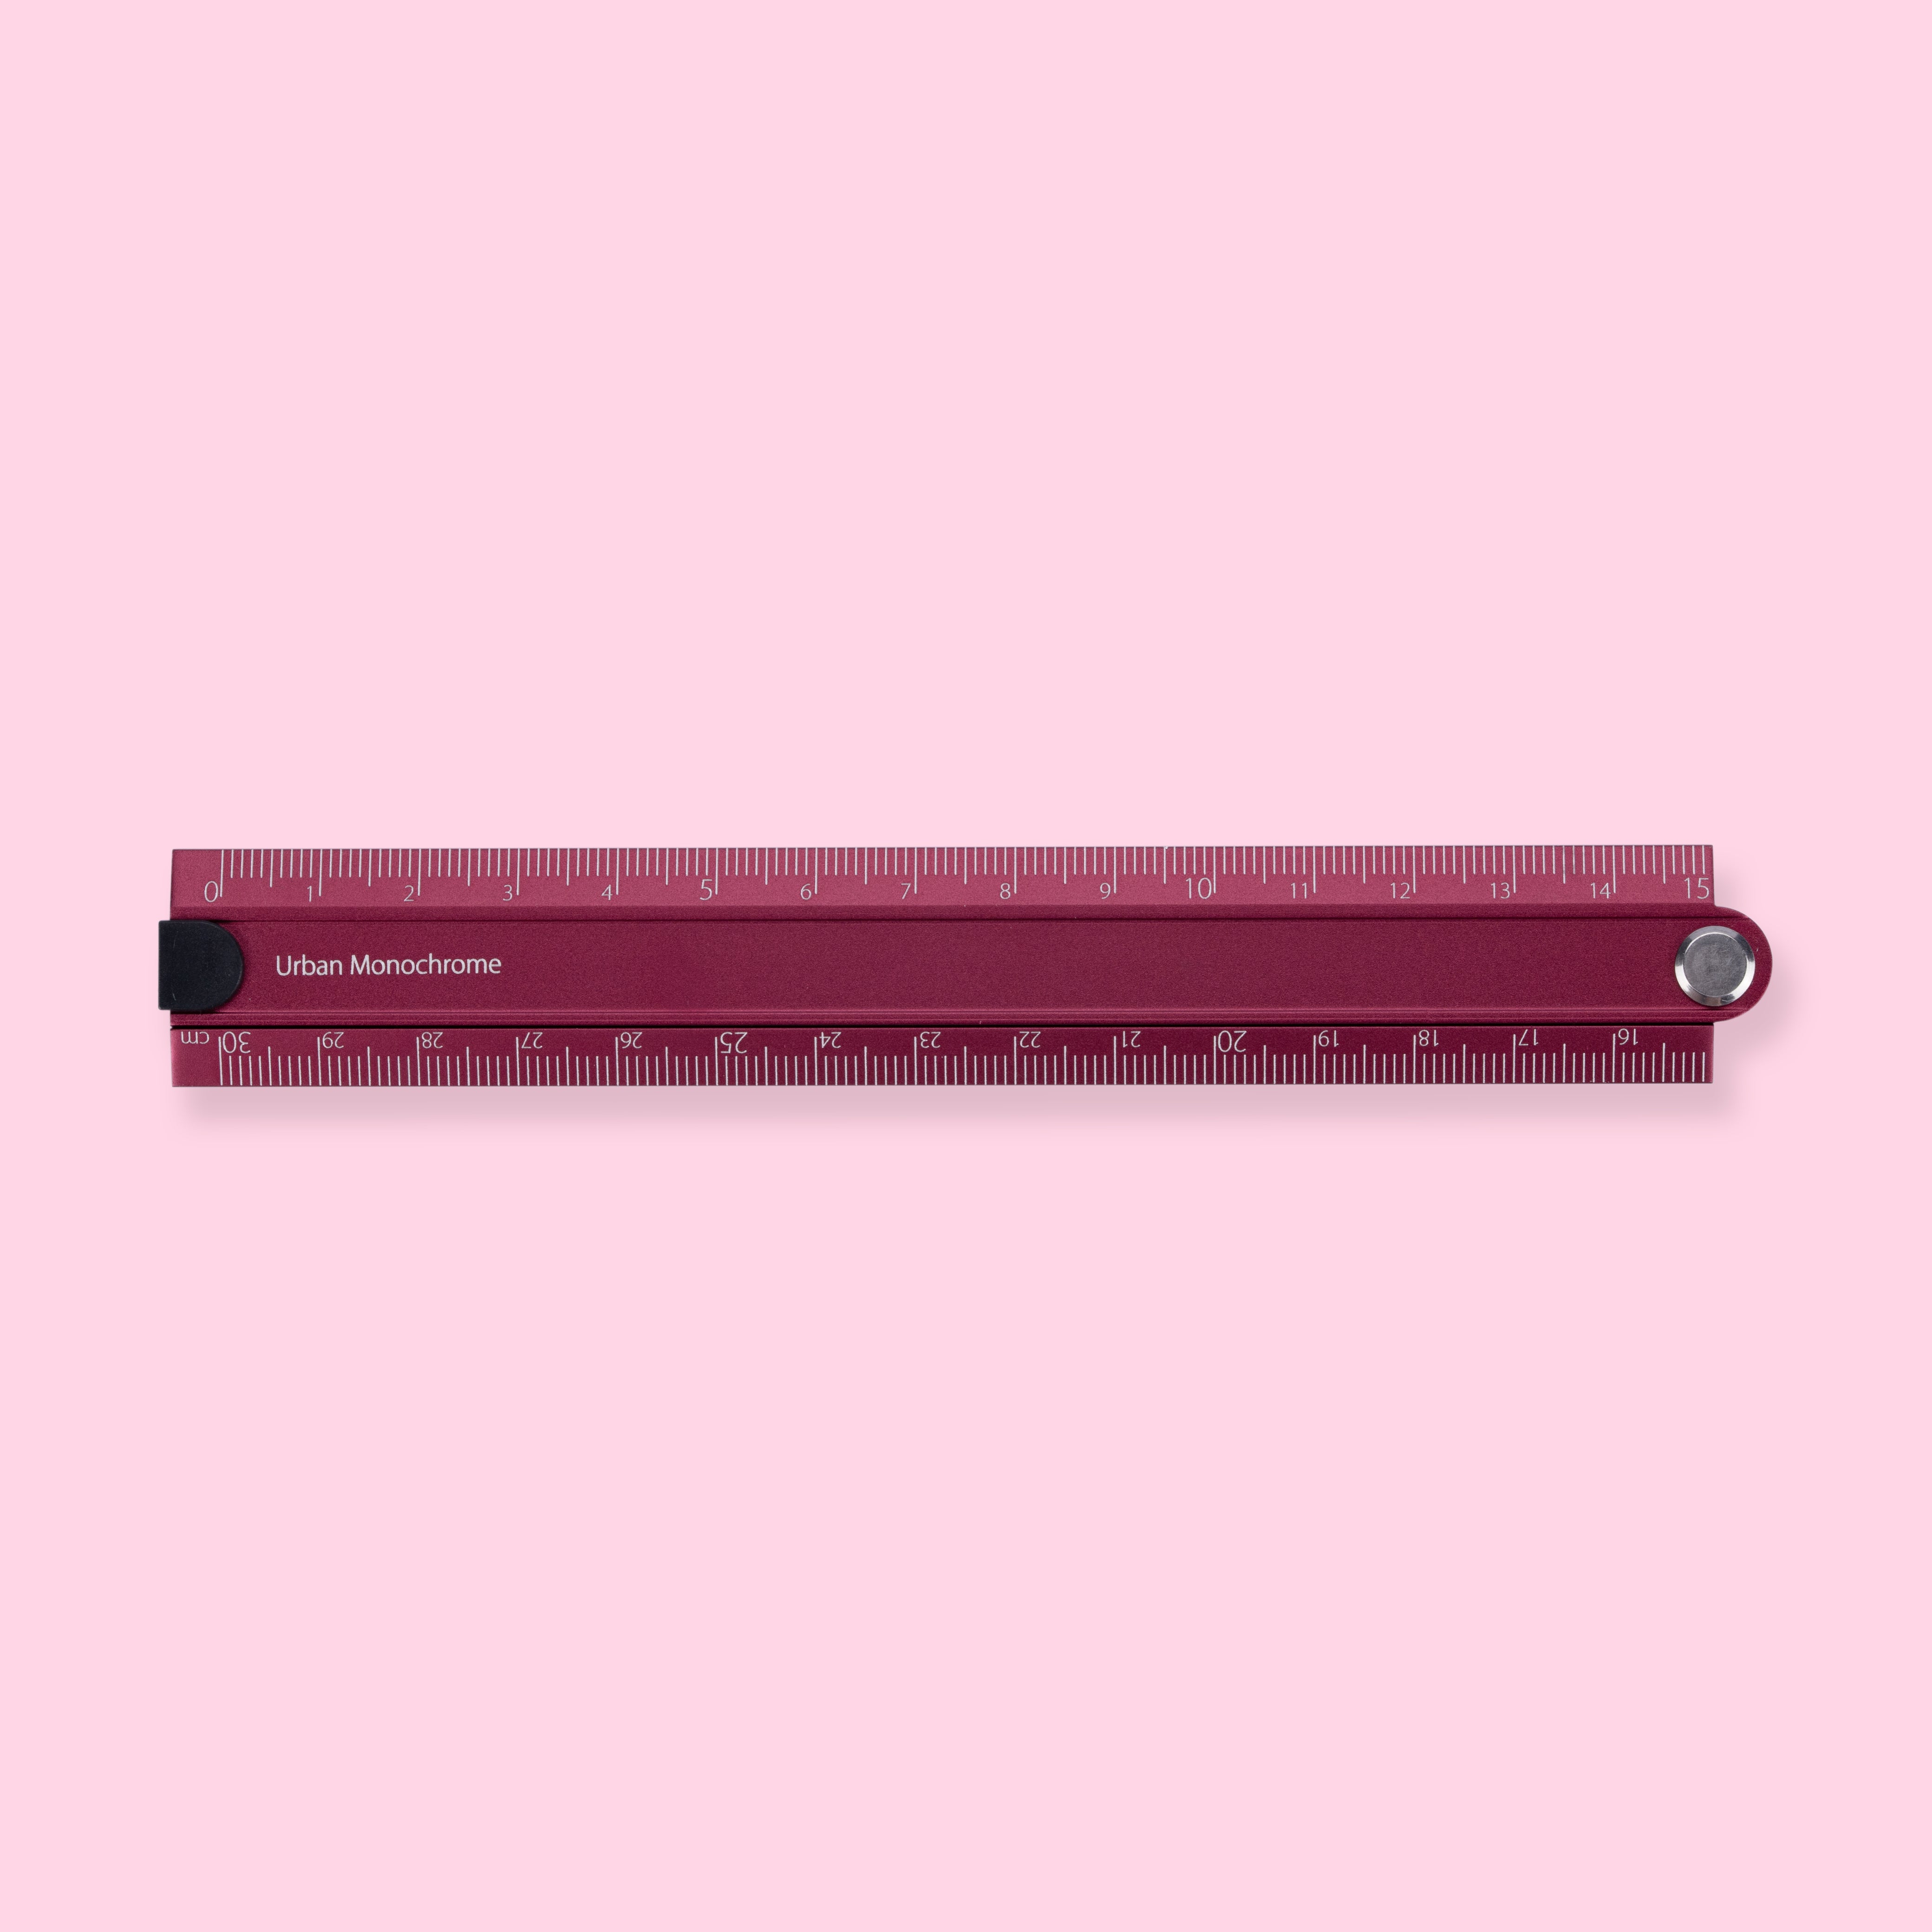 Kokuyo Aluminum Folding Ruler 1530cm - Red